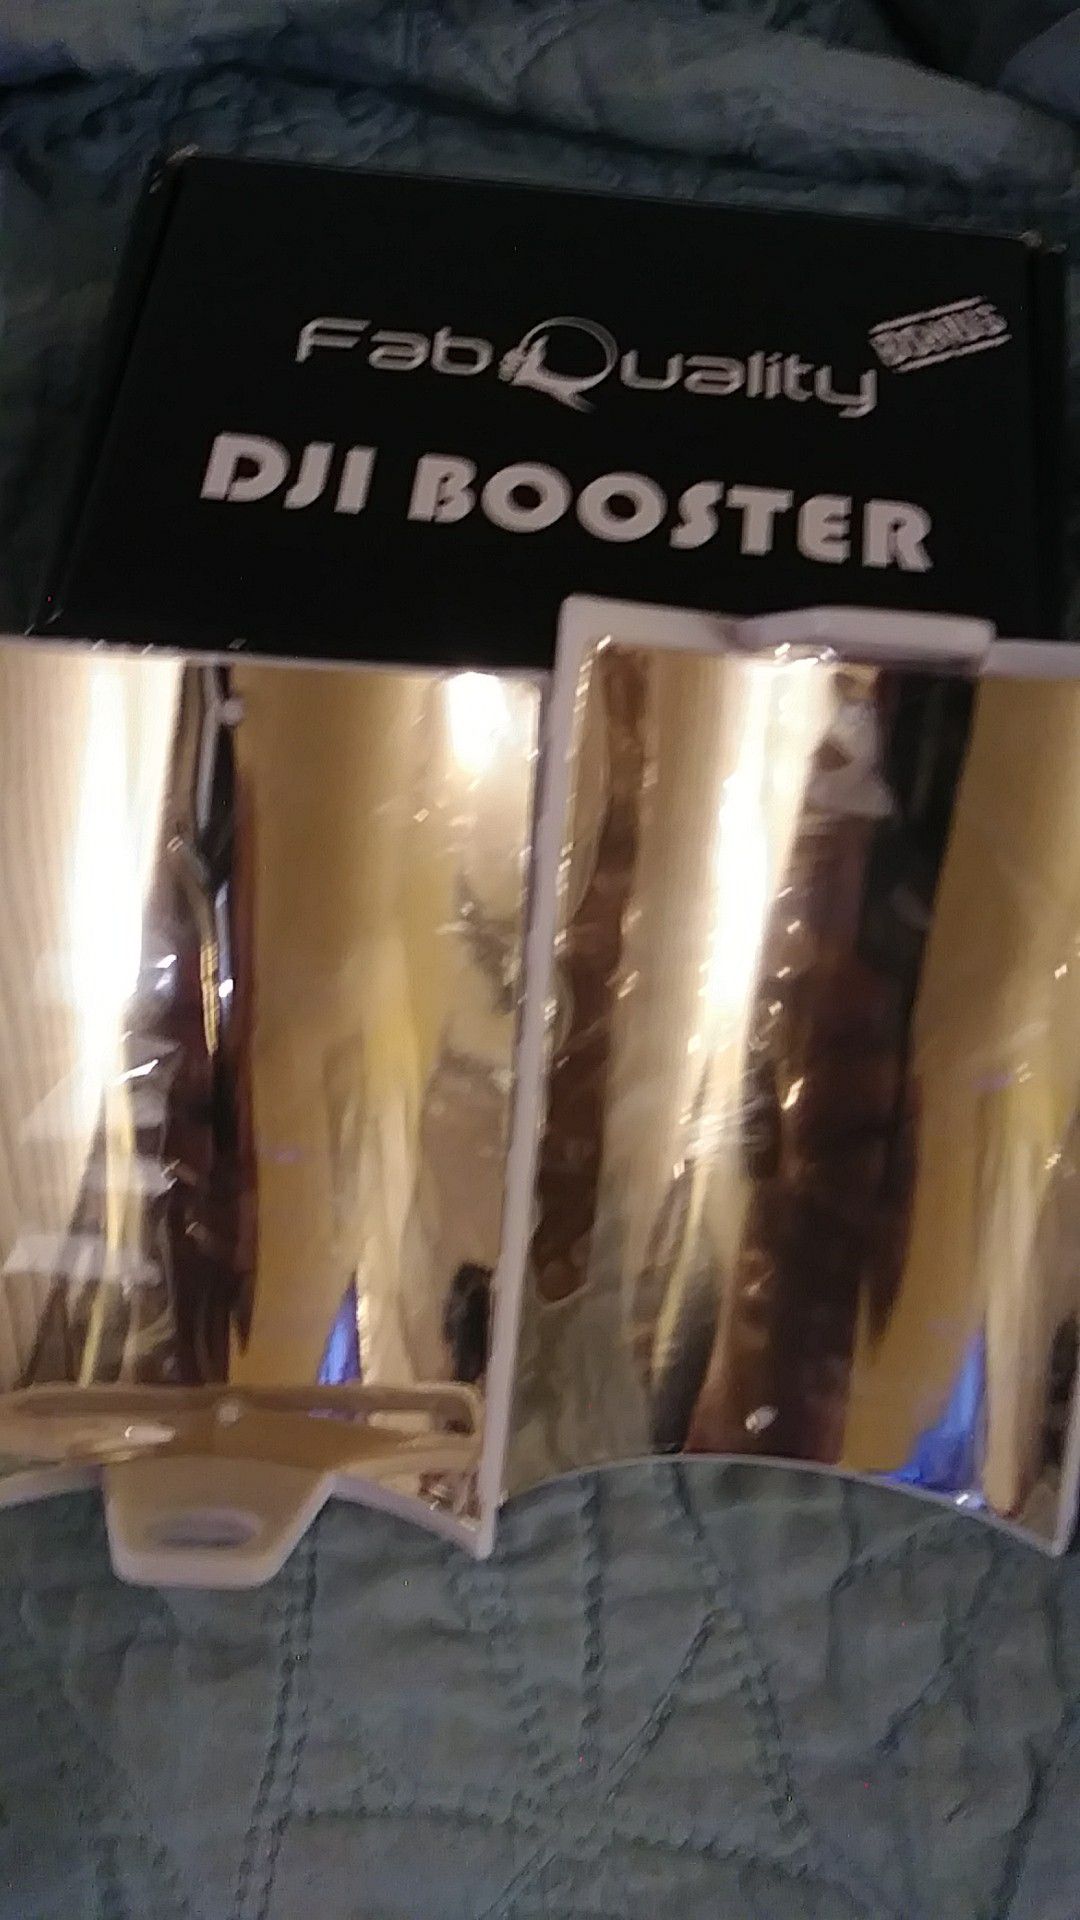 DJI booster